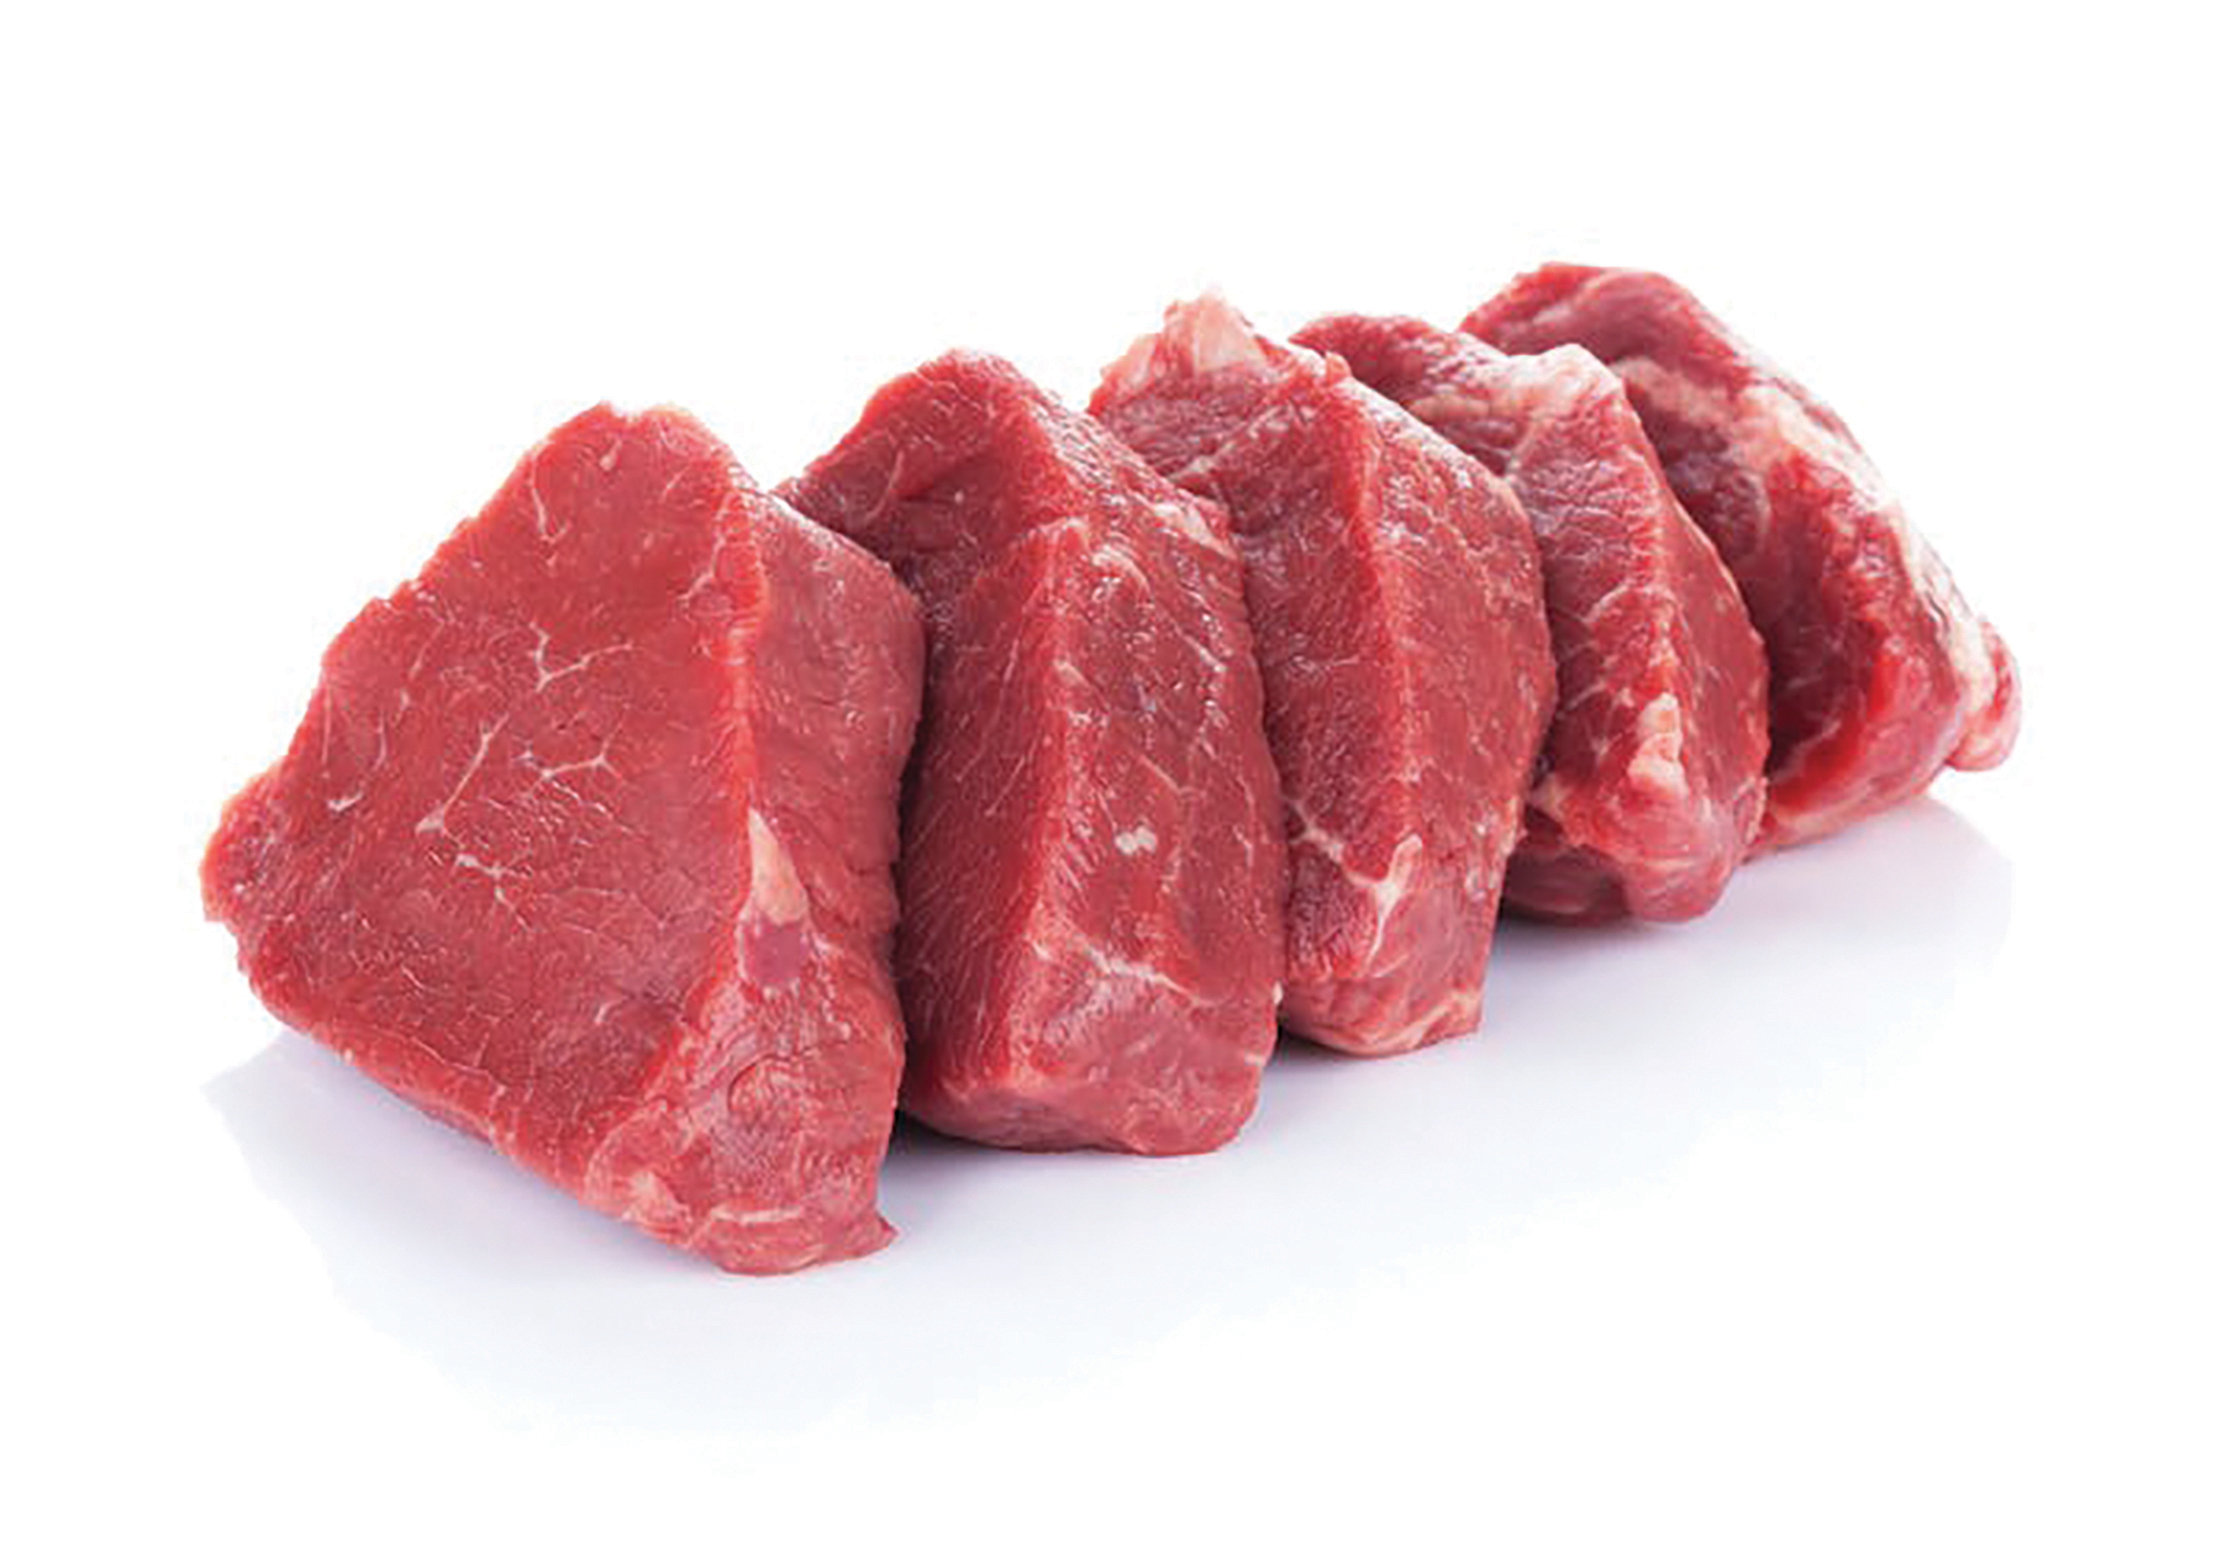 Cruelty-free meats will hit the market soon